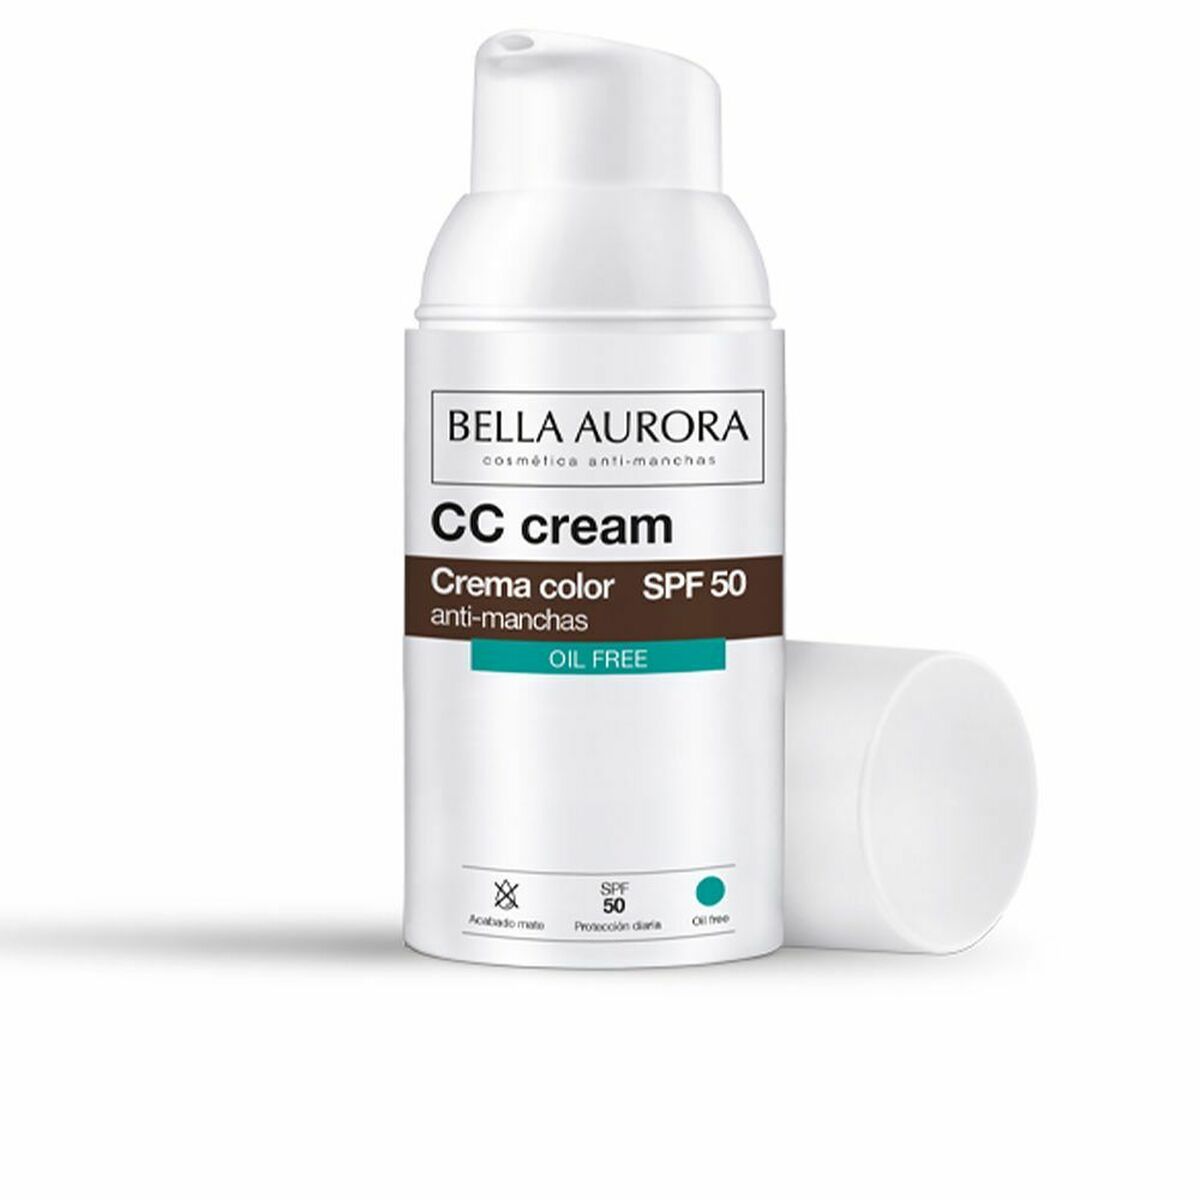 CC Cream Bella Aurora Spf 50 Without oil (30 ml)